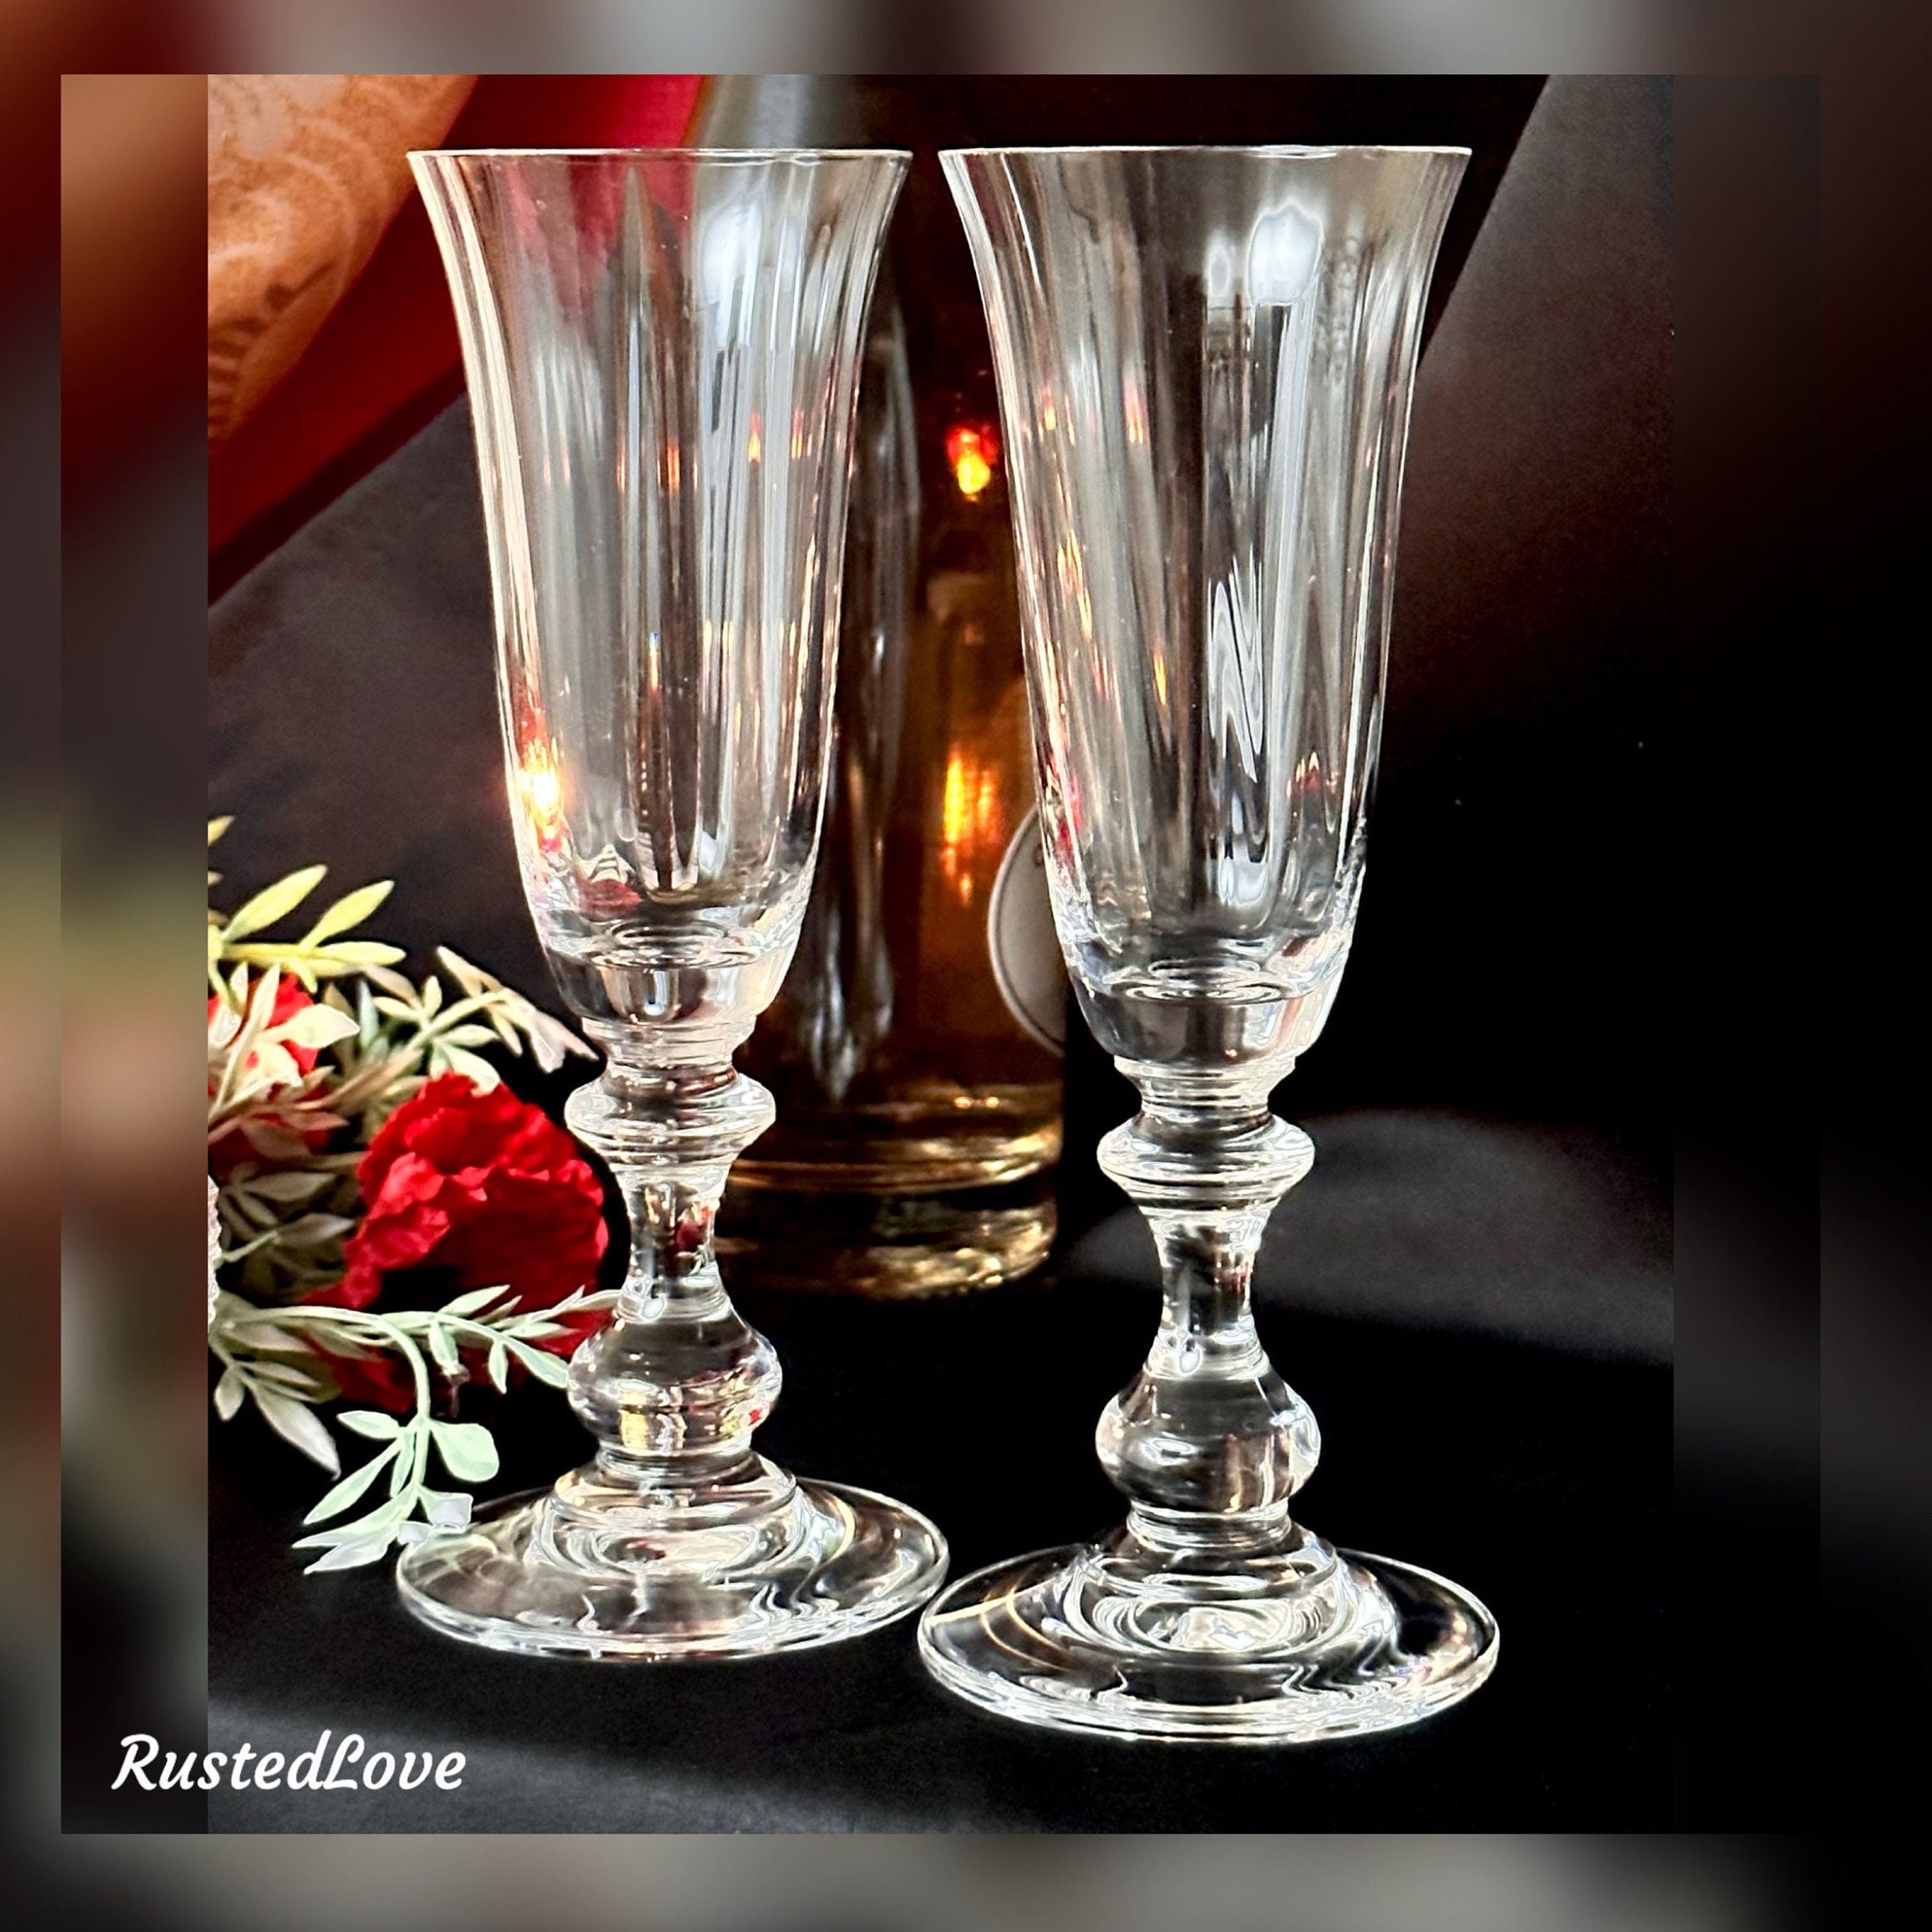 Vintage Mikasa Olympus / Champagne Flutes / Toasting Glasses / Elegant  Stemware / Crystal Glass / Wedding Champagne Glasses / Pair